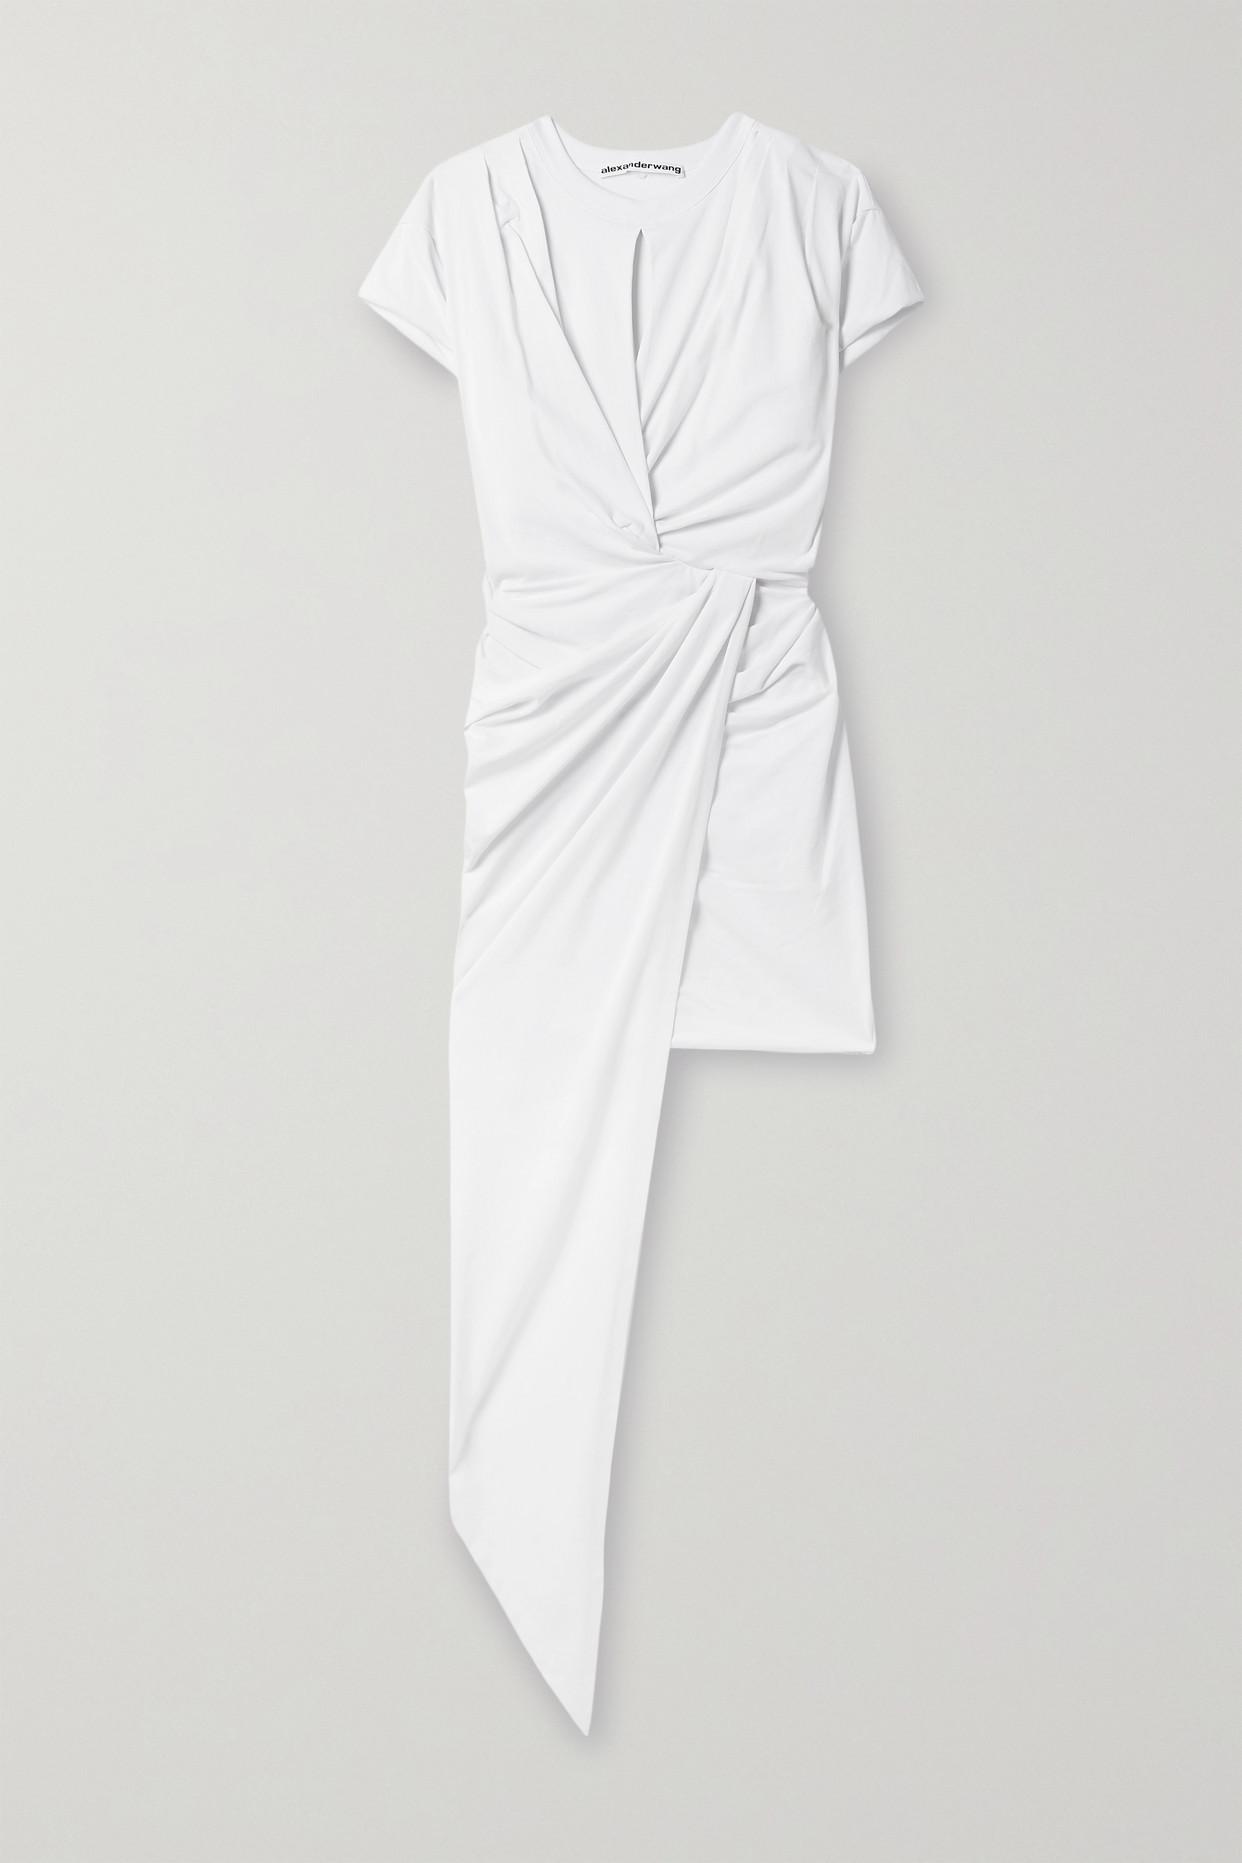 Alexander Wang Asymmetric Draped Cotton-jersey Dress in White | Lyst